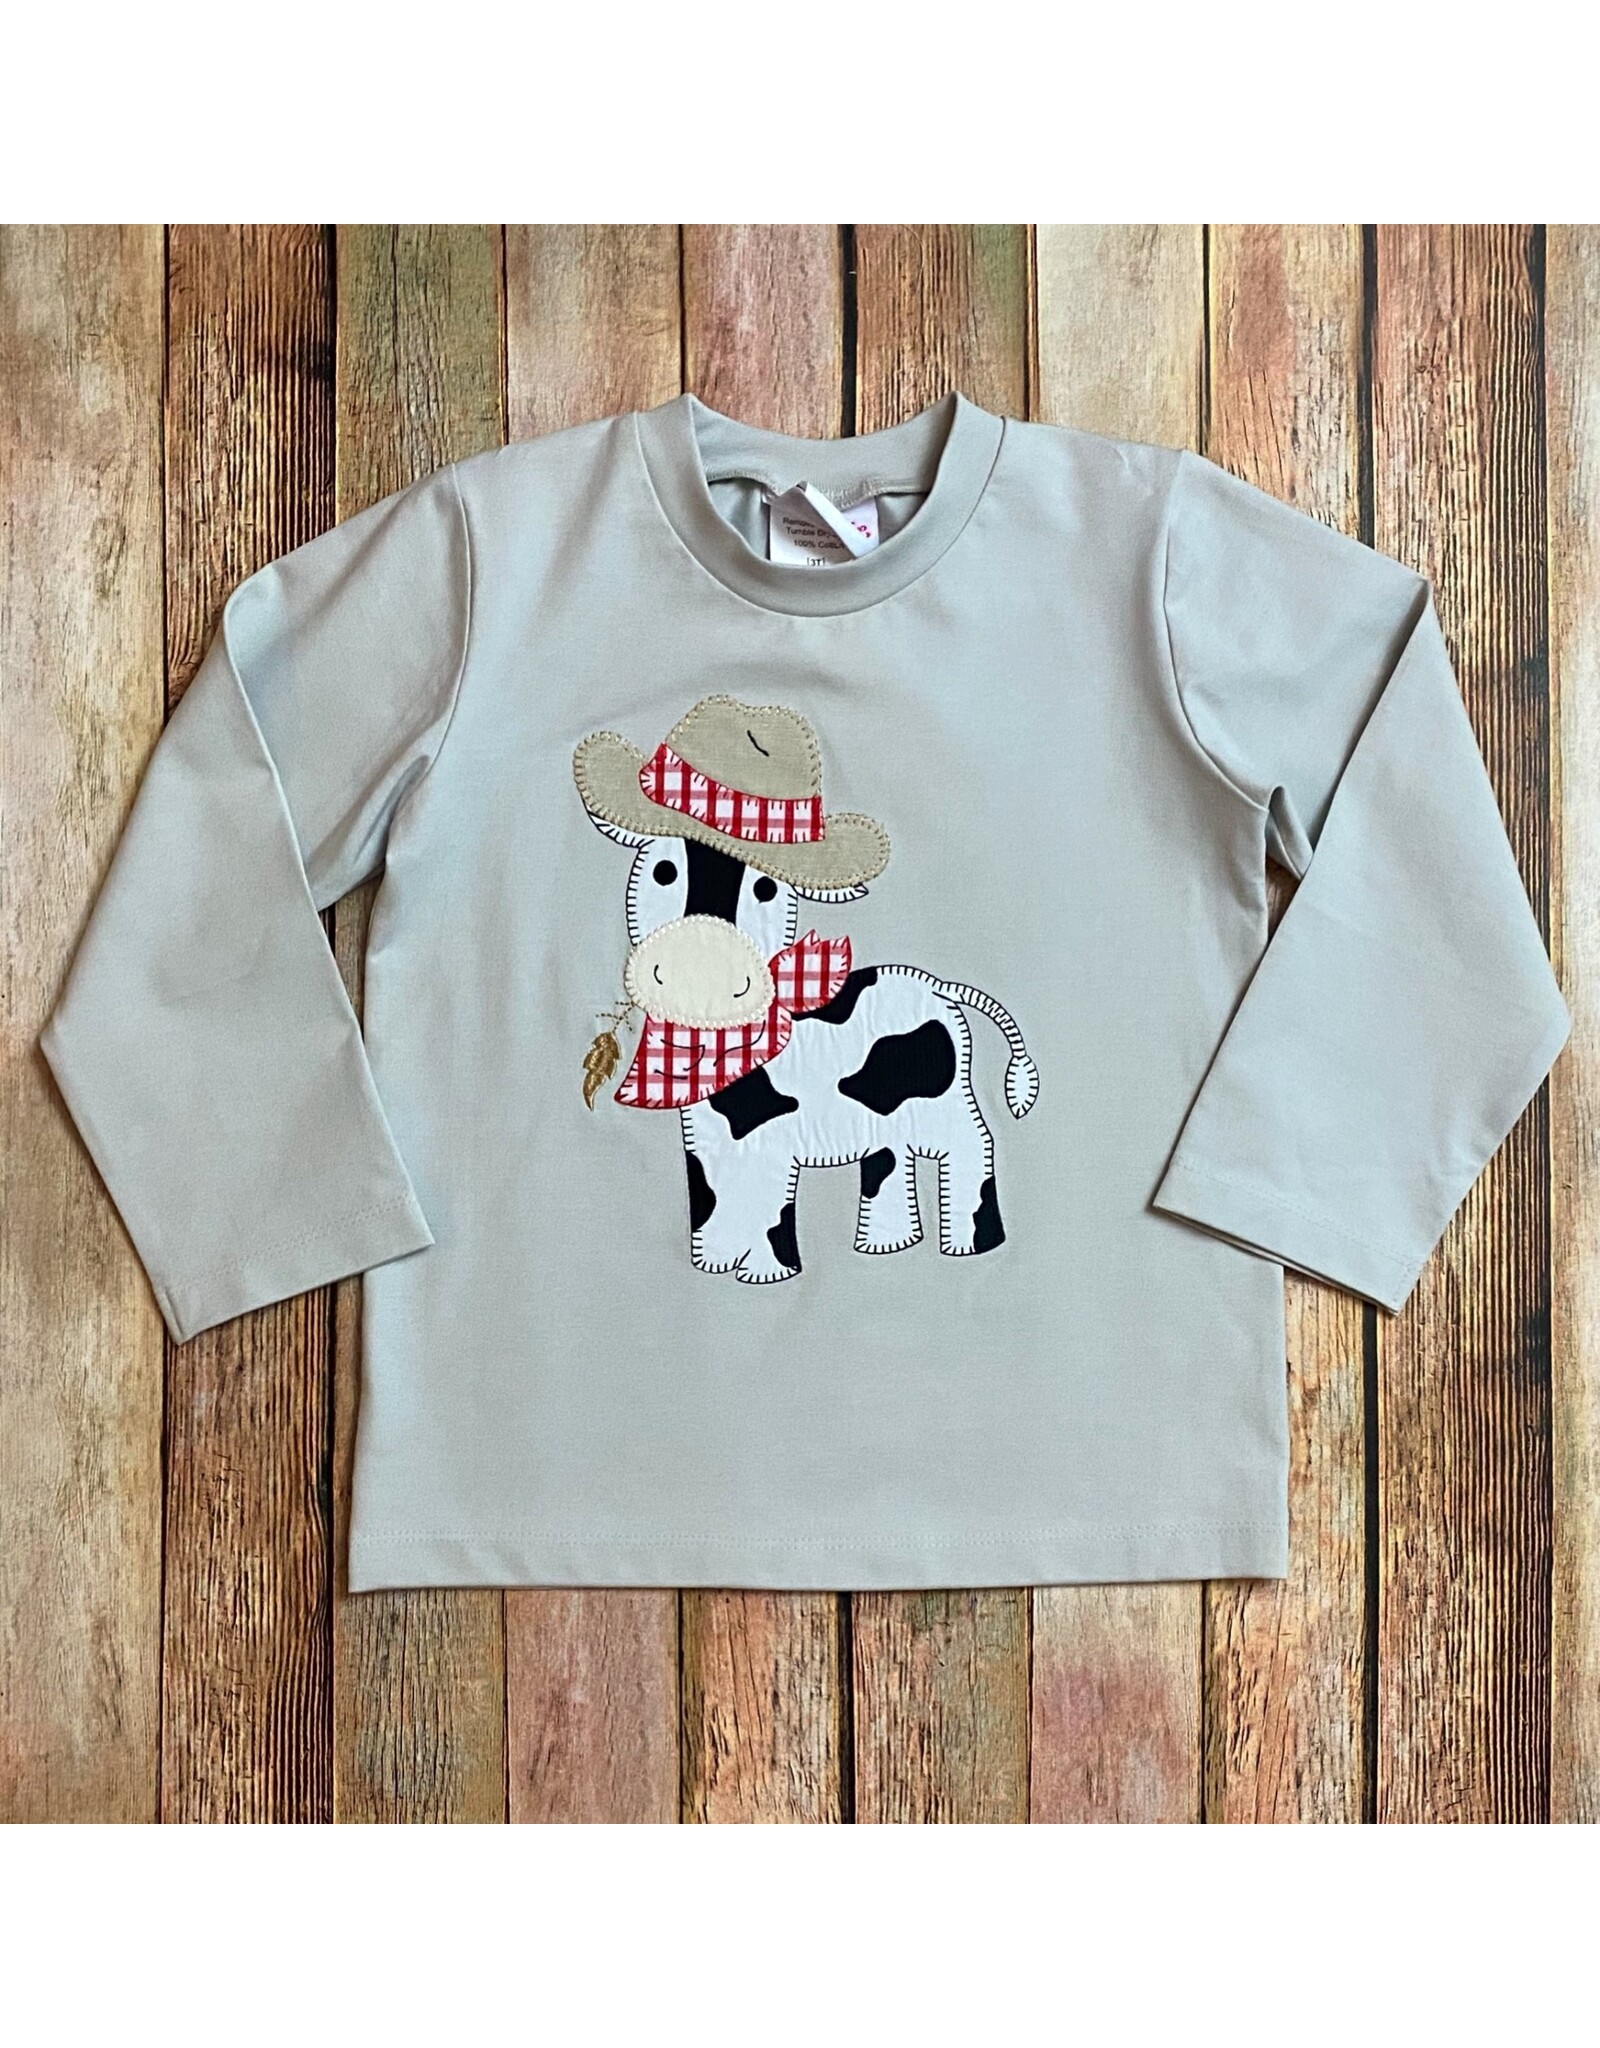 Natalie Grant- Boy Cow Shirt